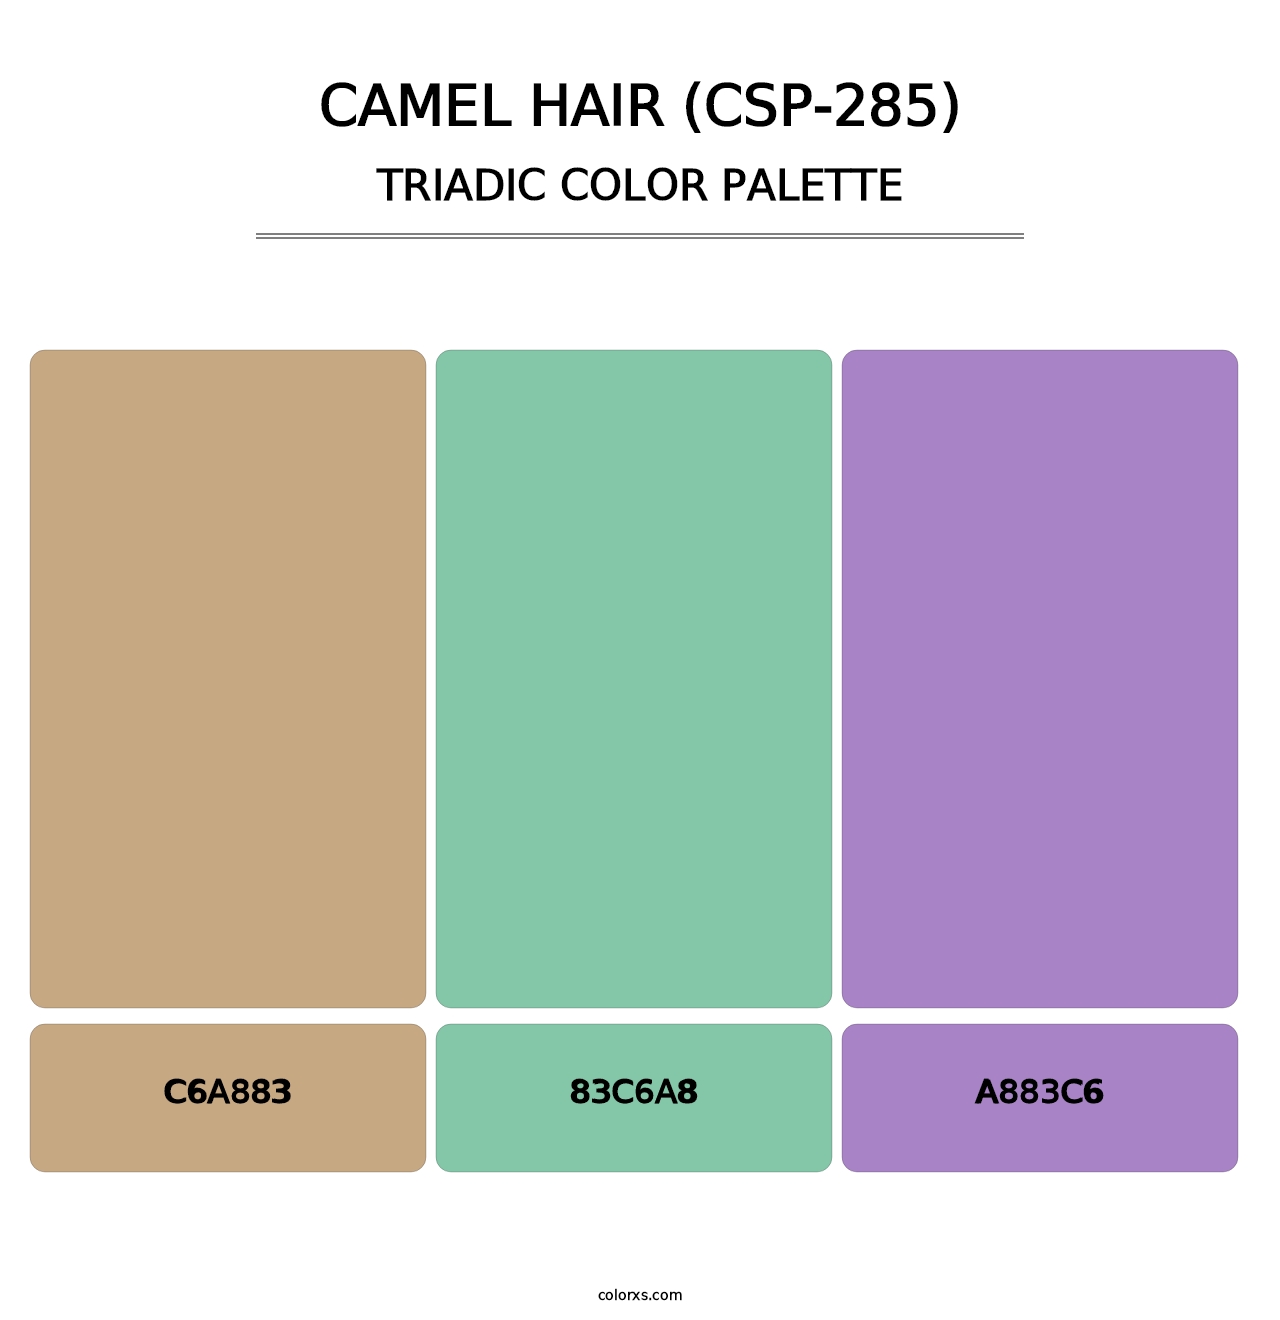 Camel Hair (CSP-285) - Triadic Color Palette